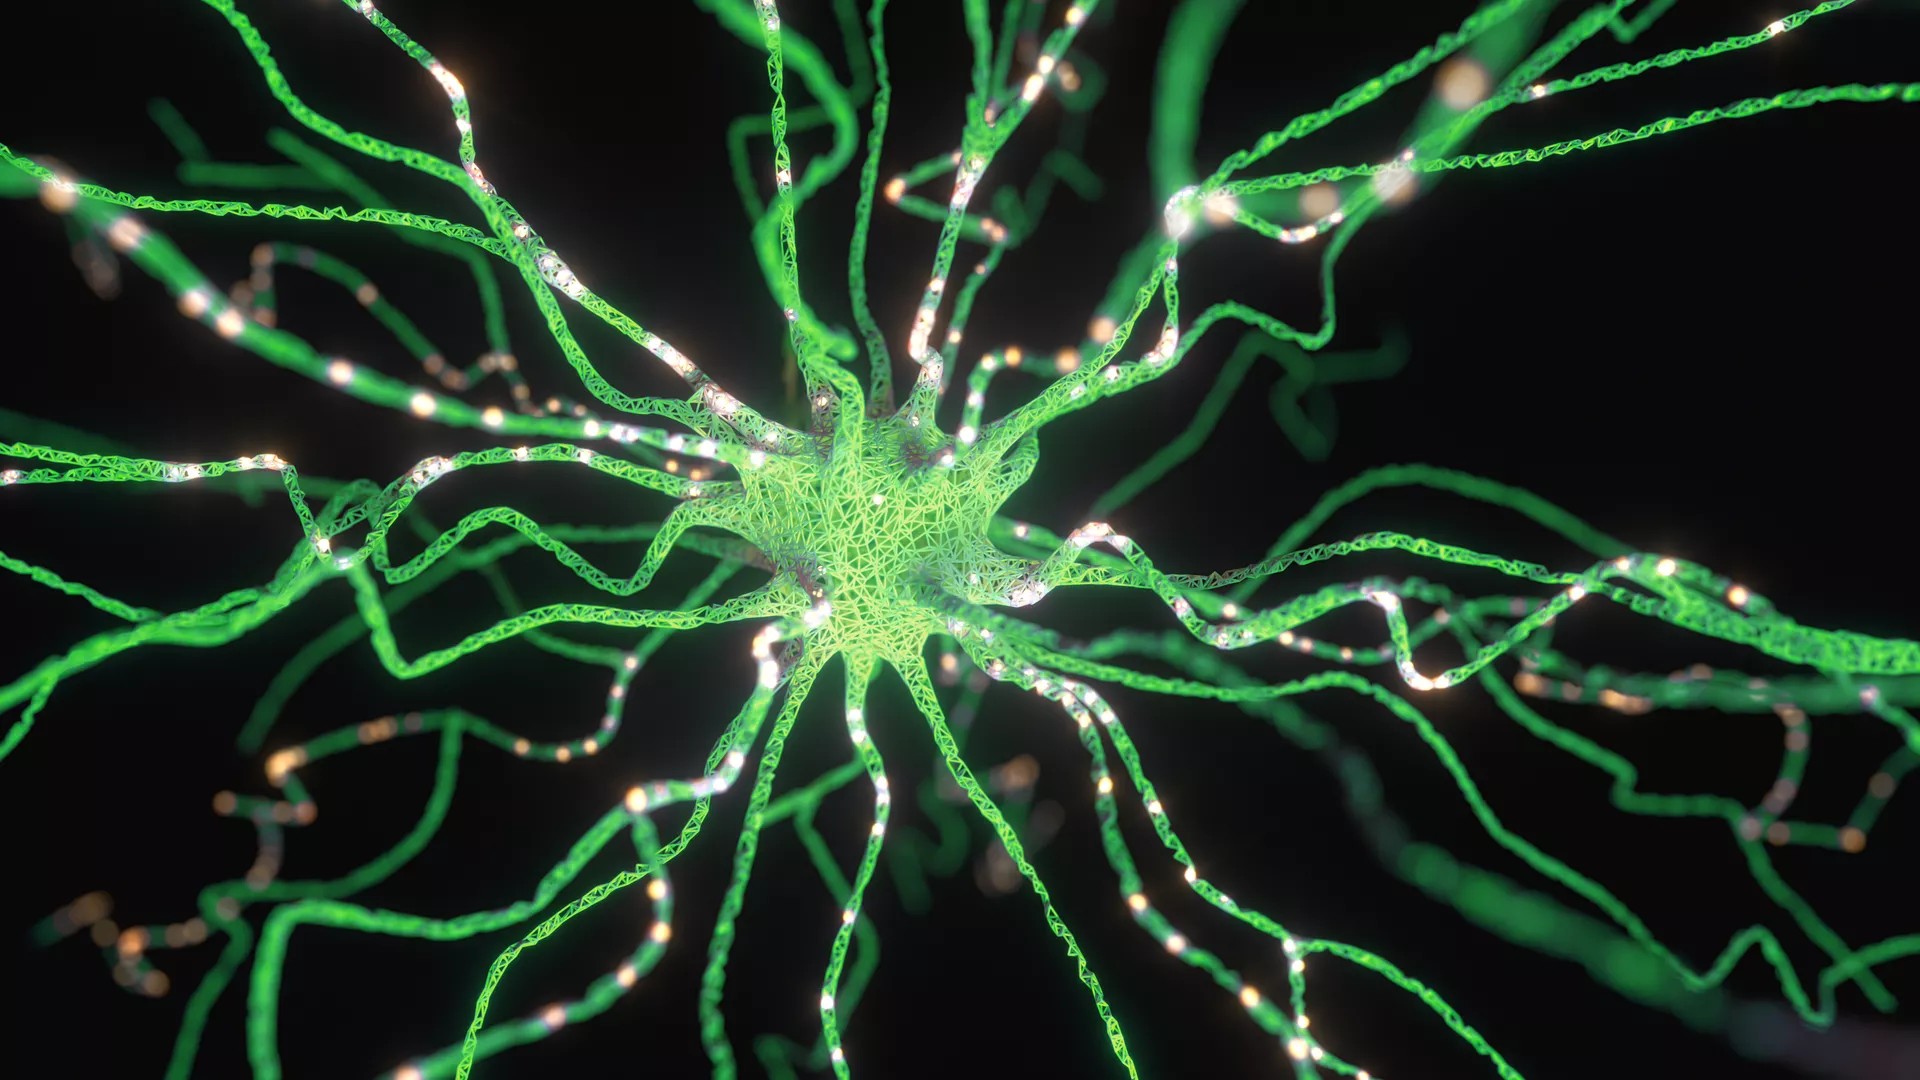 Cover image for "Neurorobotics explores Machine Learning"